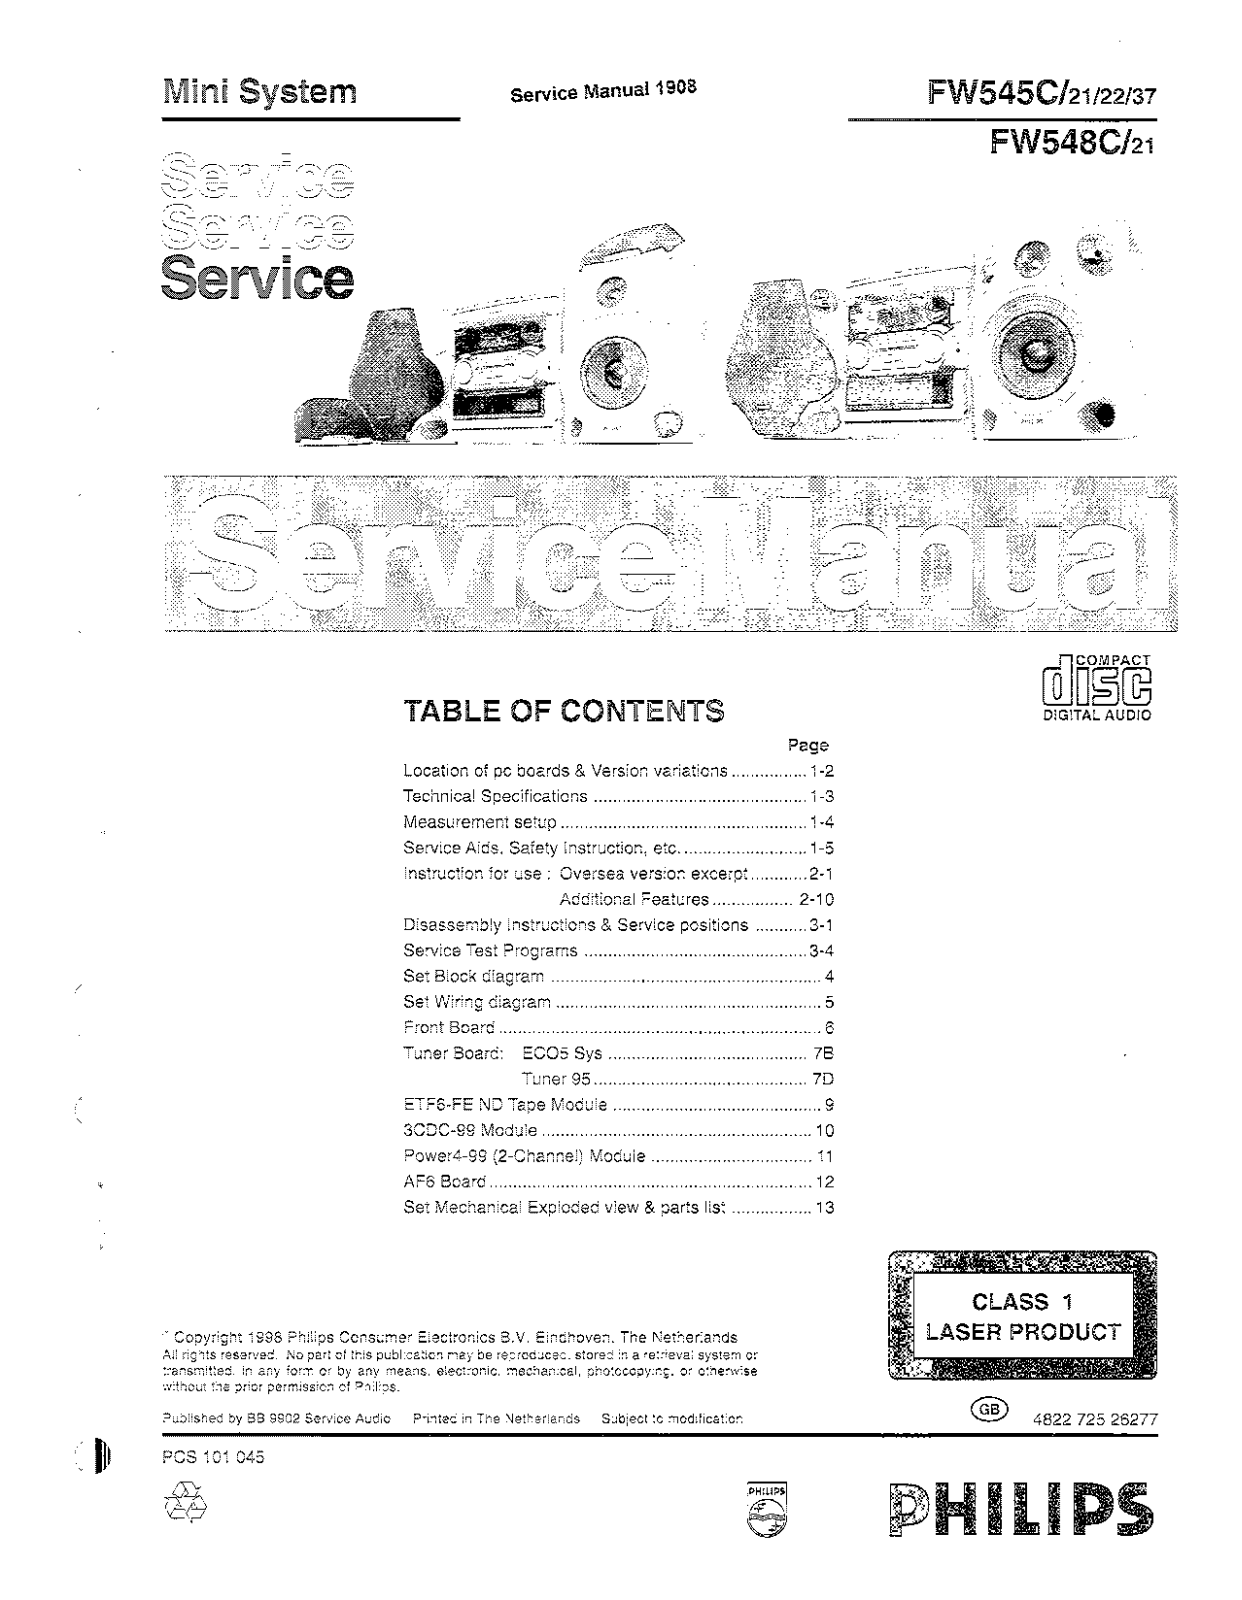 Philips FW-545-C Service Manual